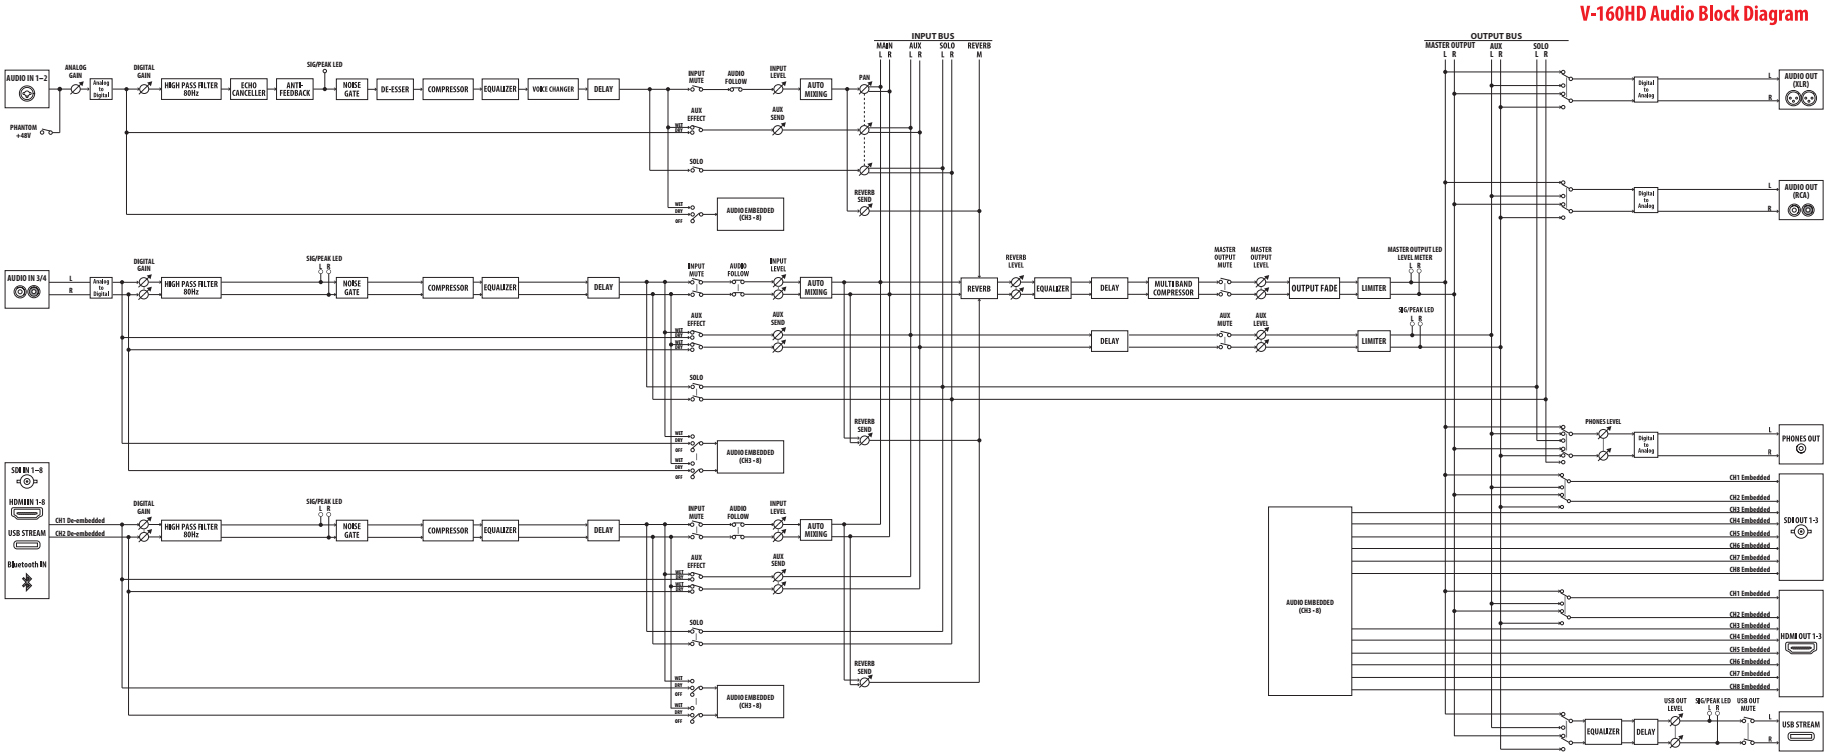 Roland V-160HD audio diagram